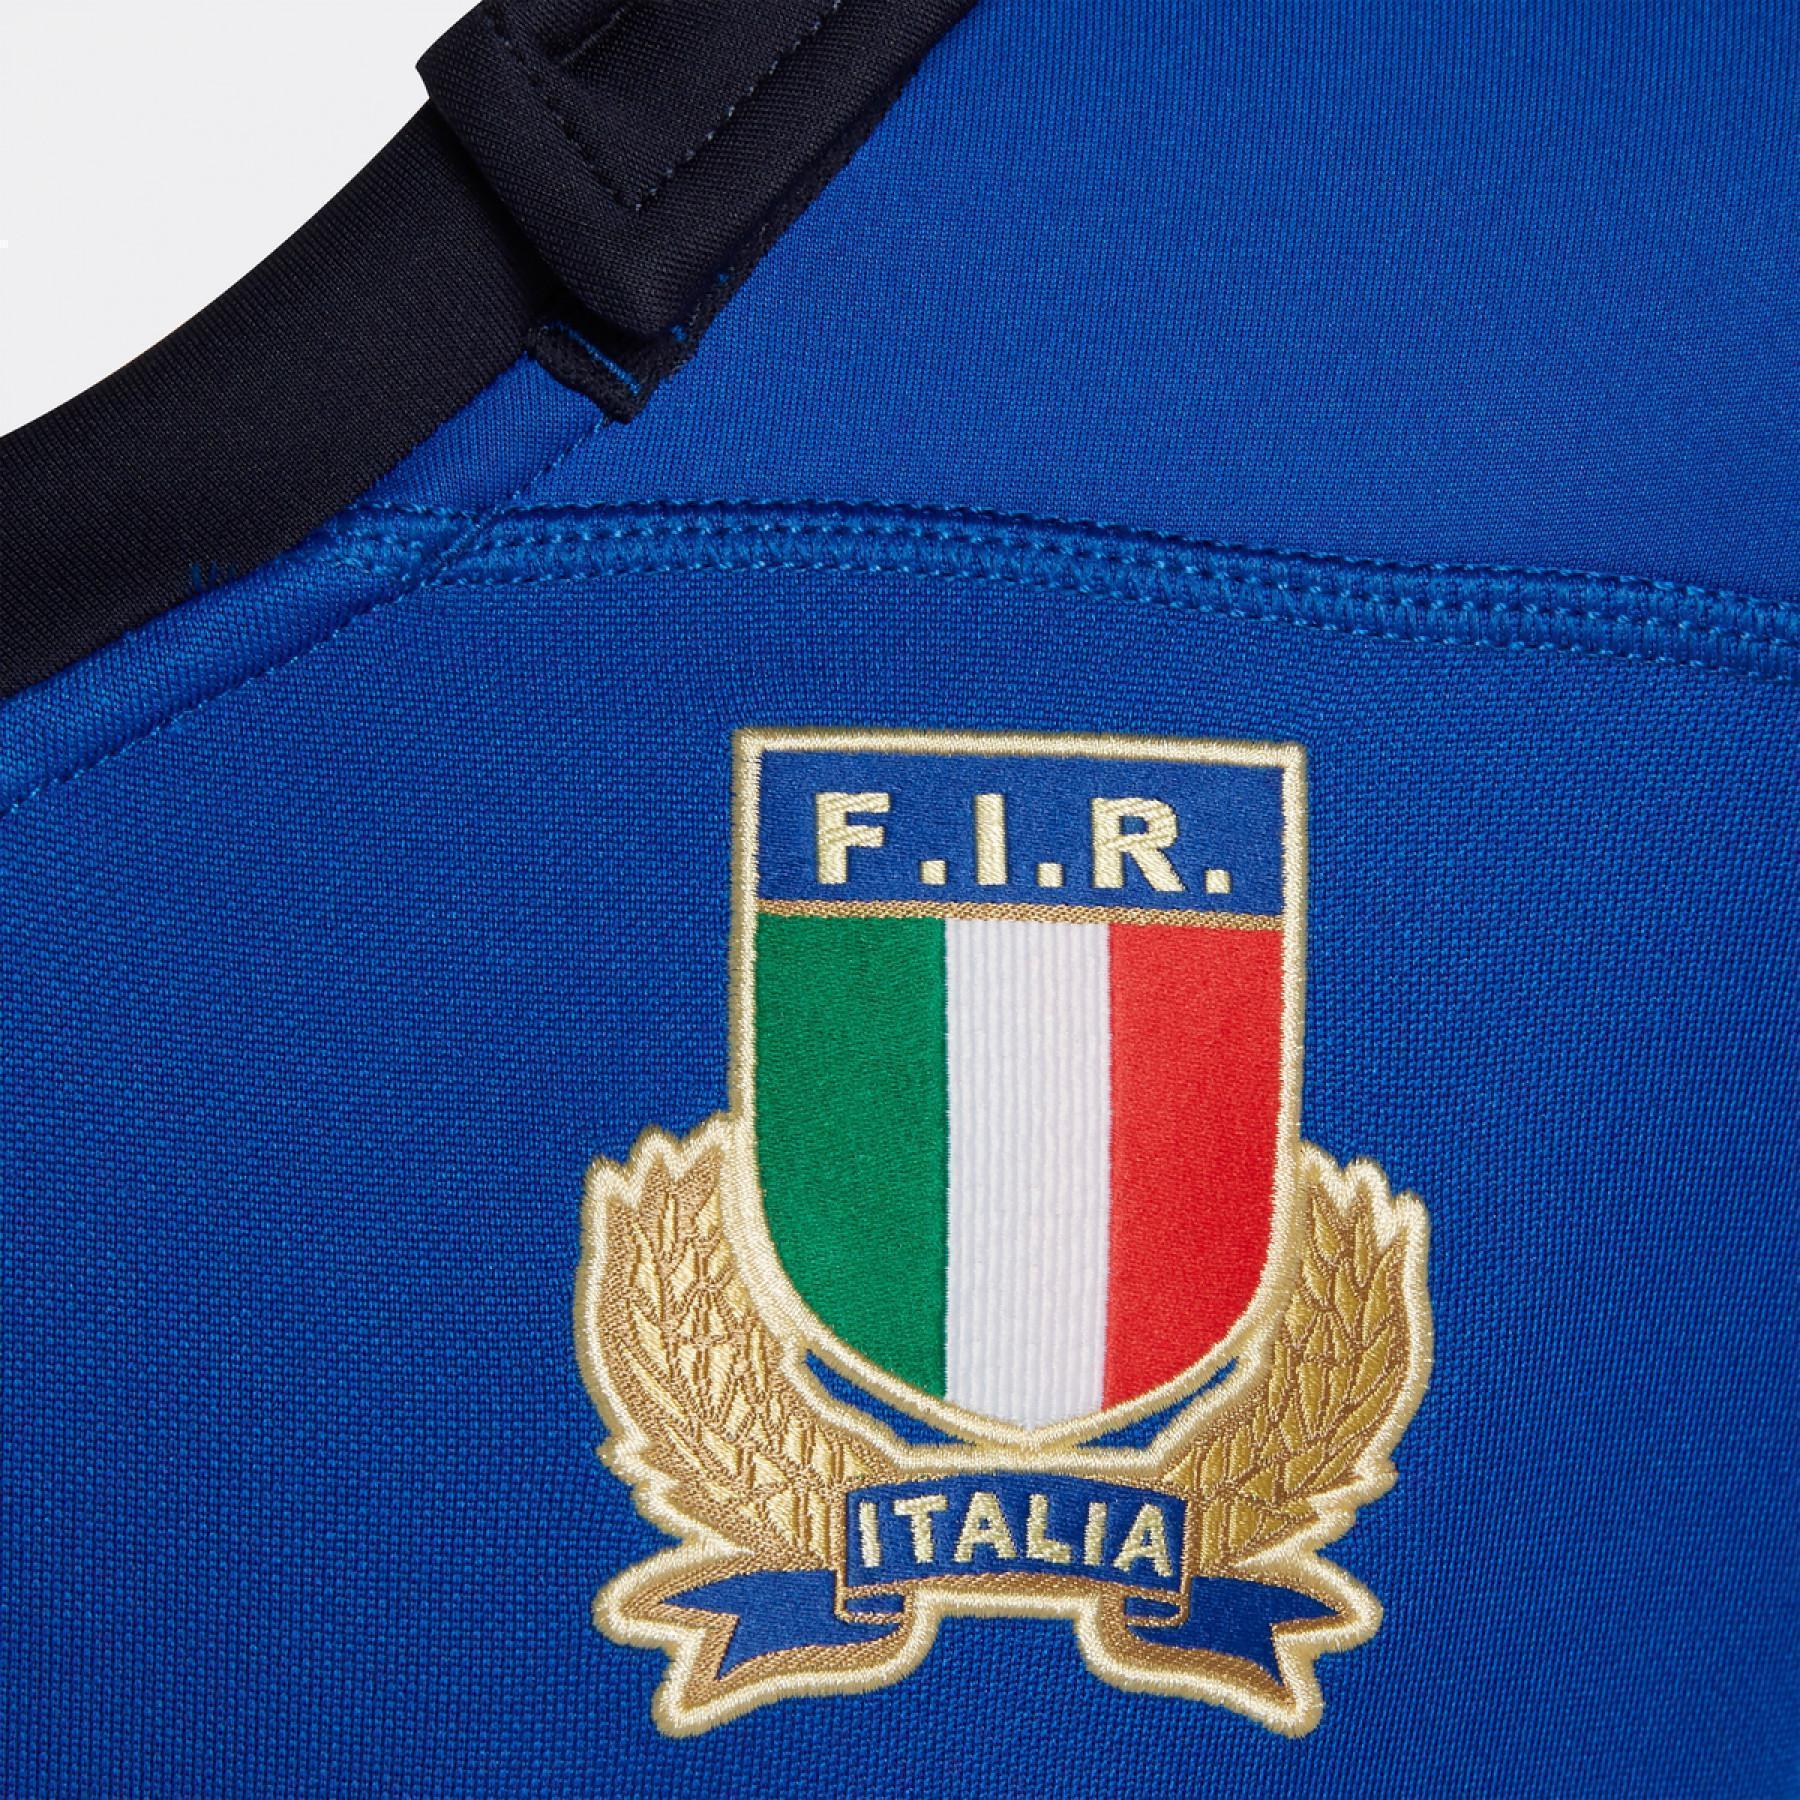 Children's home jersey Italie rugby 2019